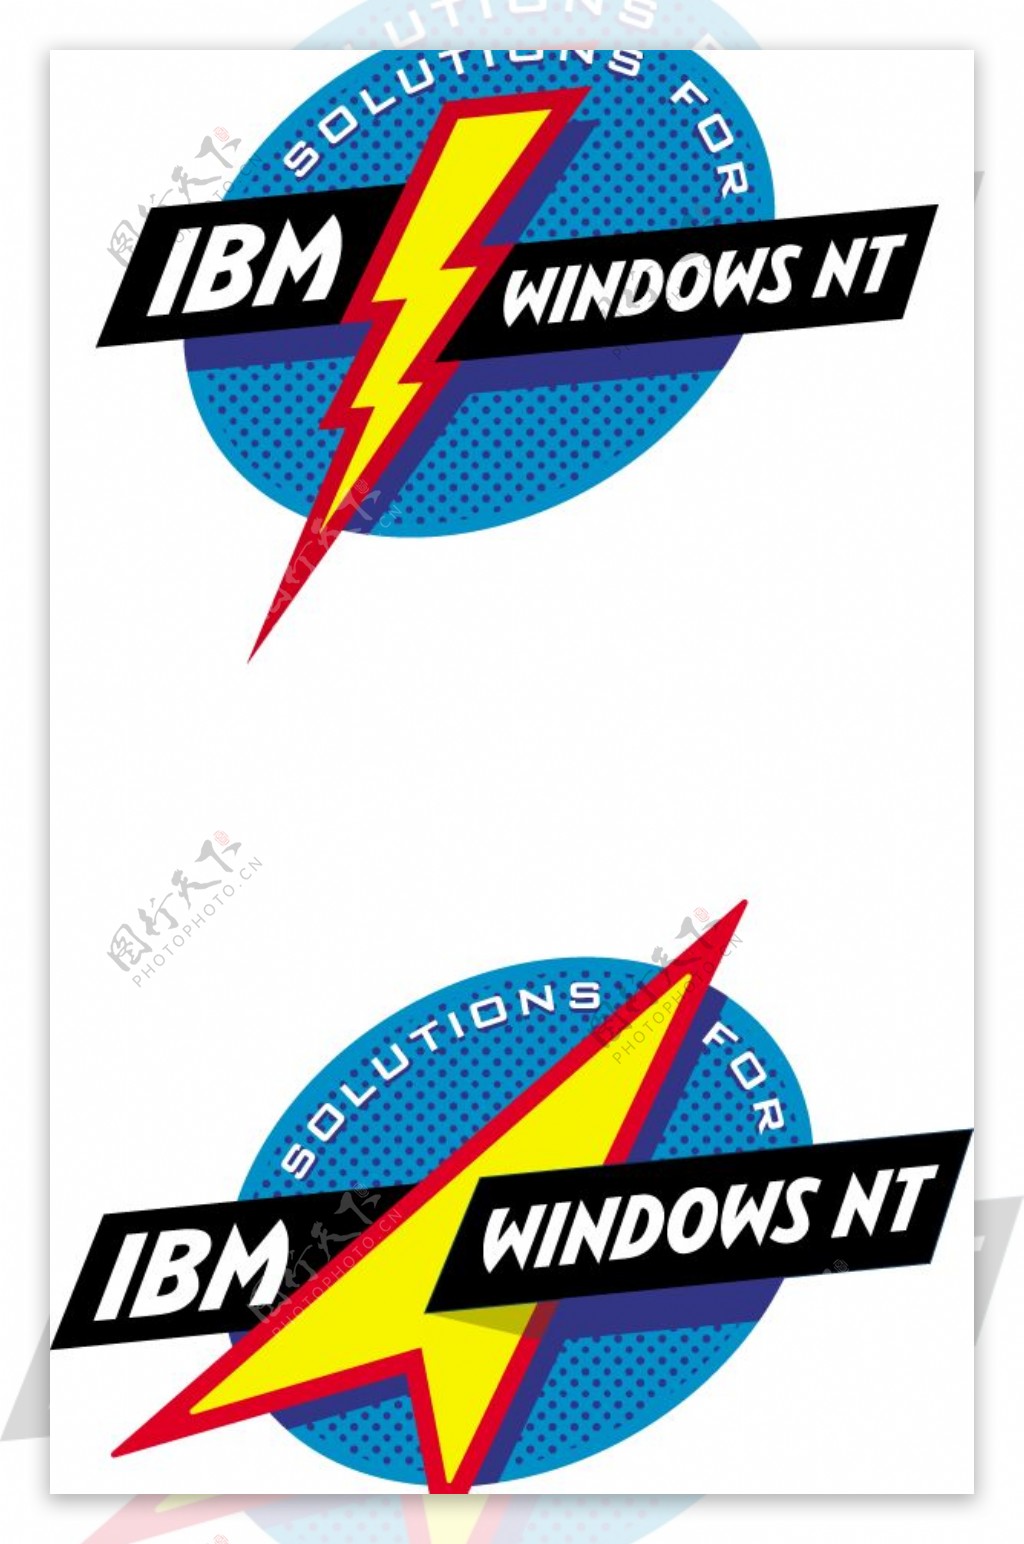 IBMsolutionsforWindowsNTlogo设计欣赏IBM解决方案的WindowsNT标志设计欣赏